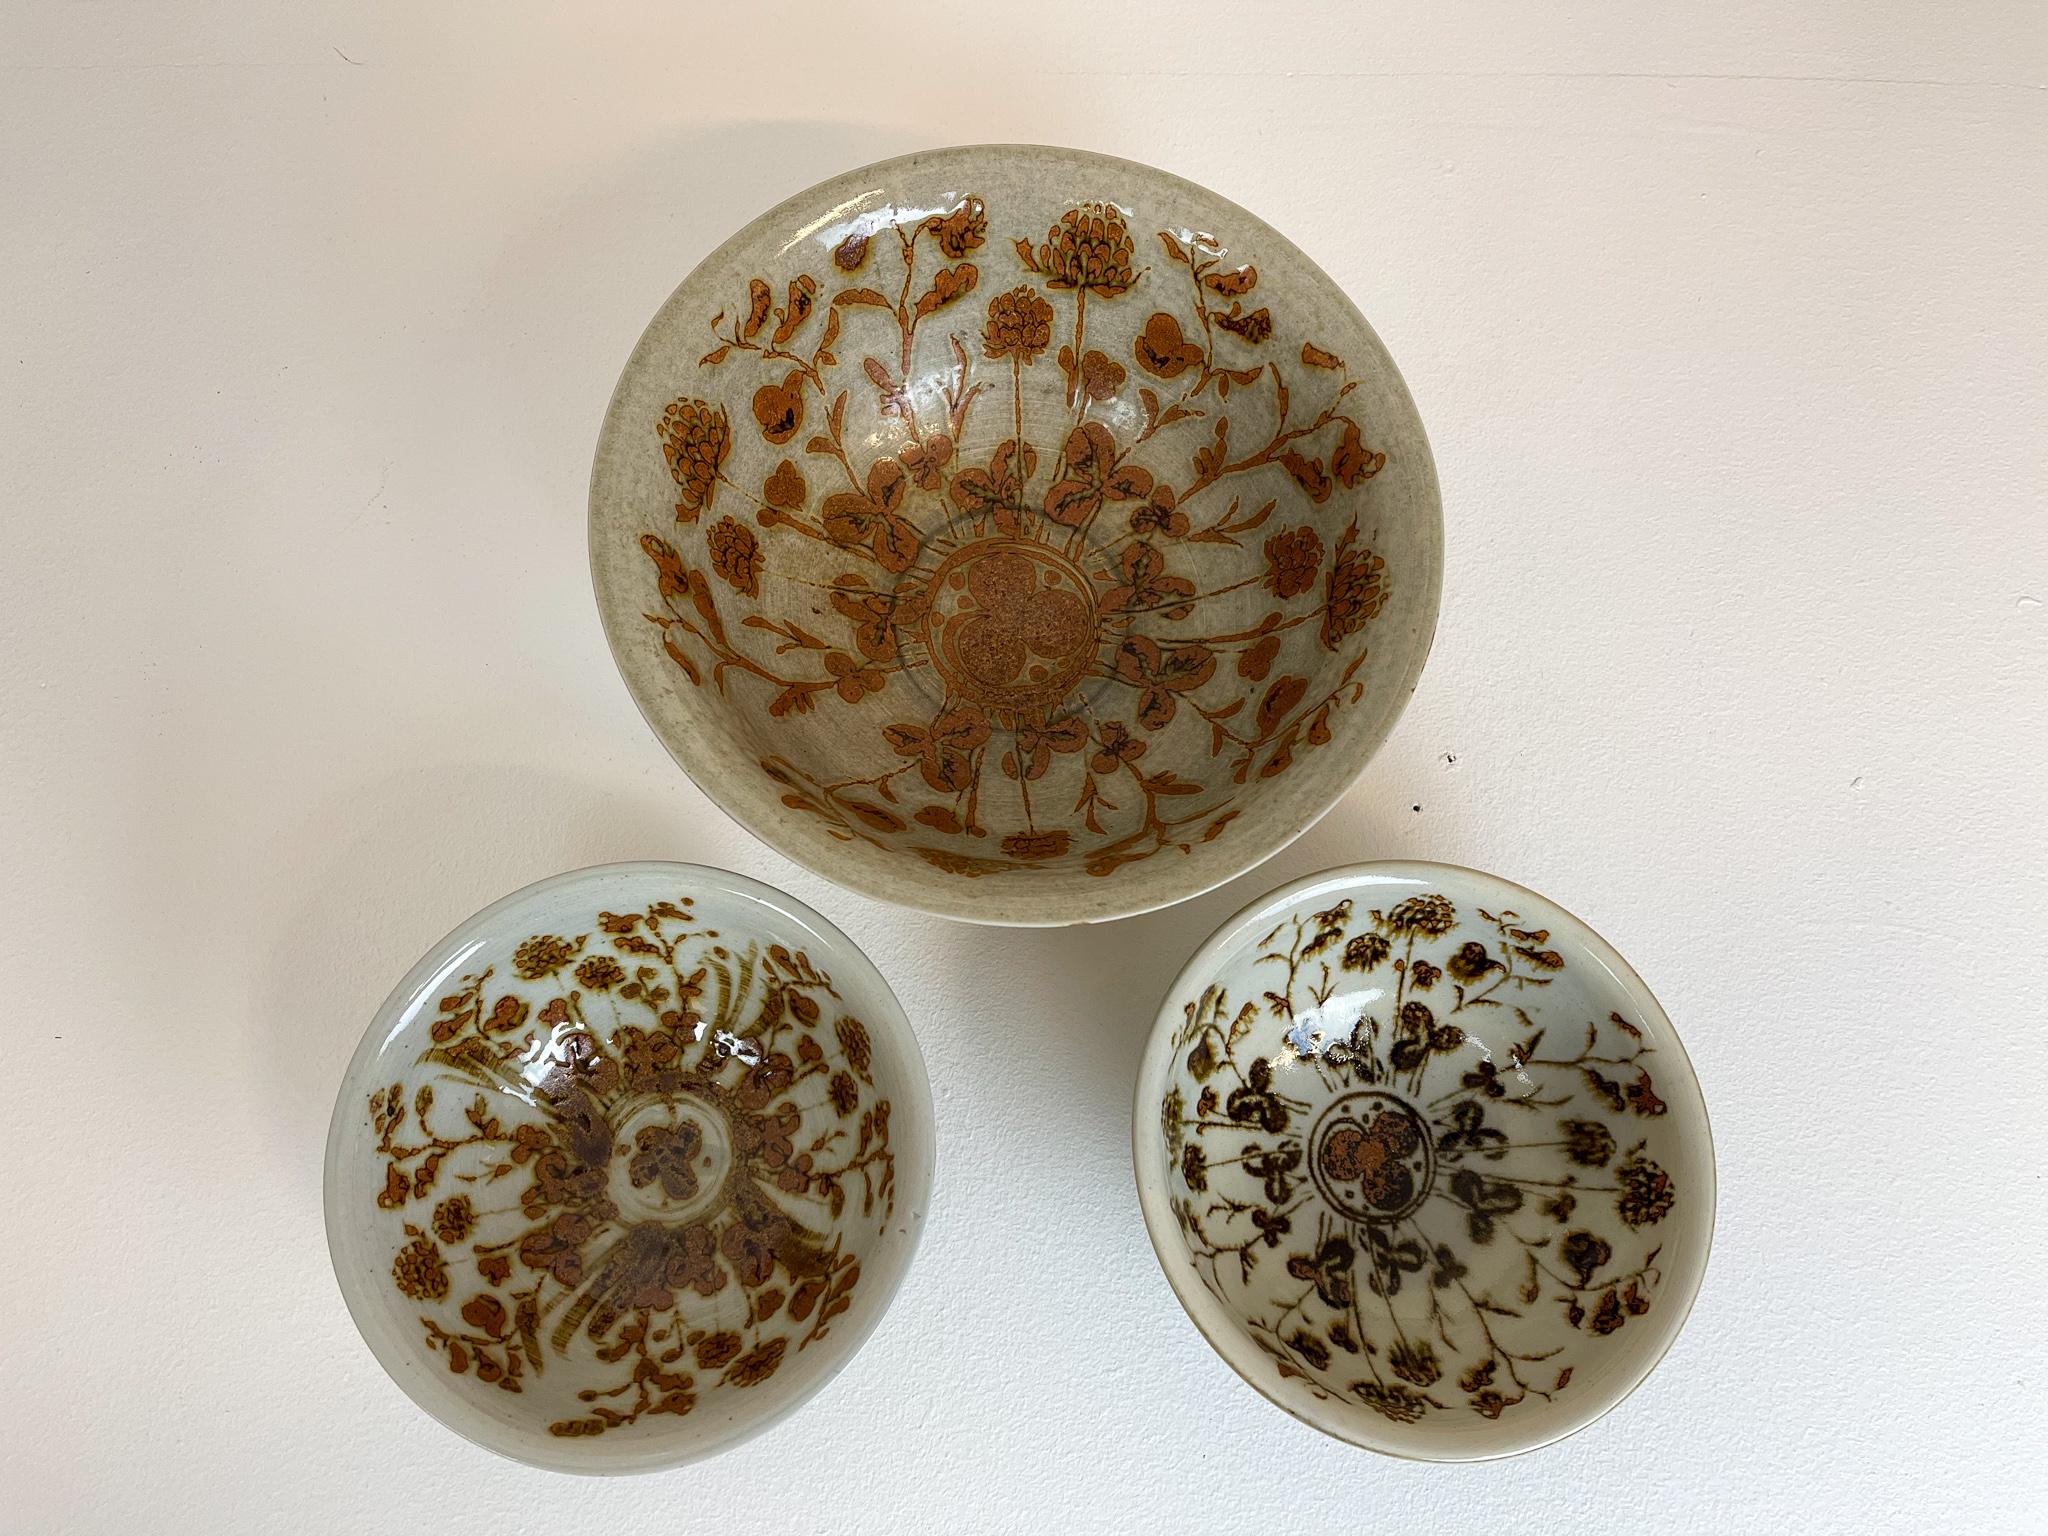 Late 20th Century Scandinavian Modern Ceramic Bowls by Carl-Harry Stålhane Design Huset, Sweden For Sale